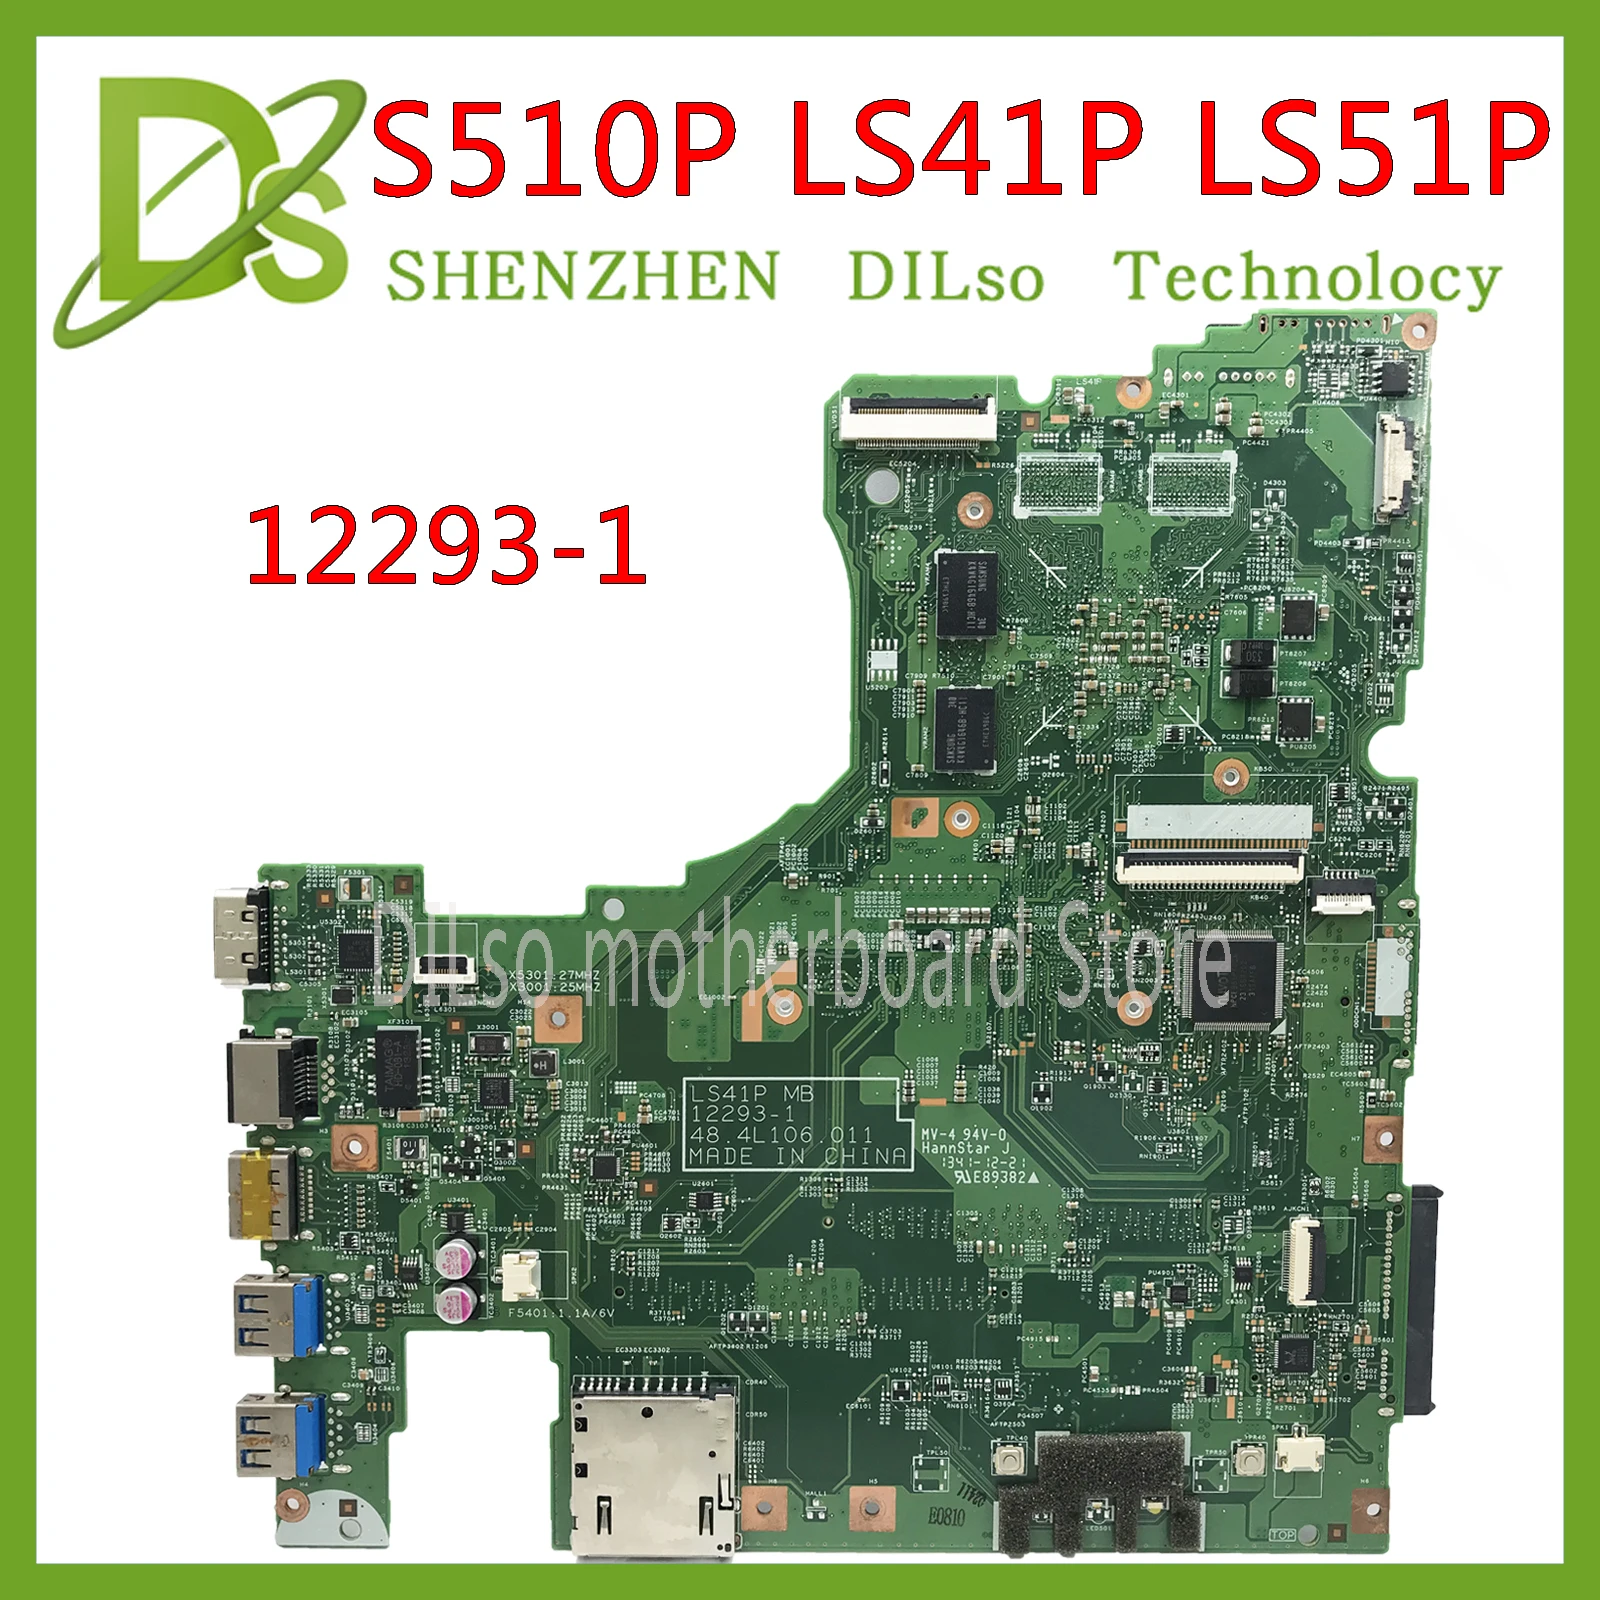 Black Friday  KEFU 12293-1 48.4L106.011 motherboard for Lenovo S510P LS41P LS51P motherboard I5-4200U CPU GT720M-